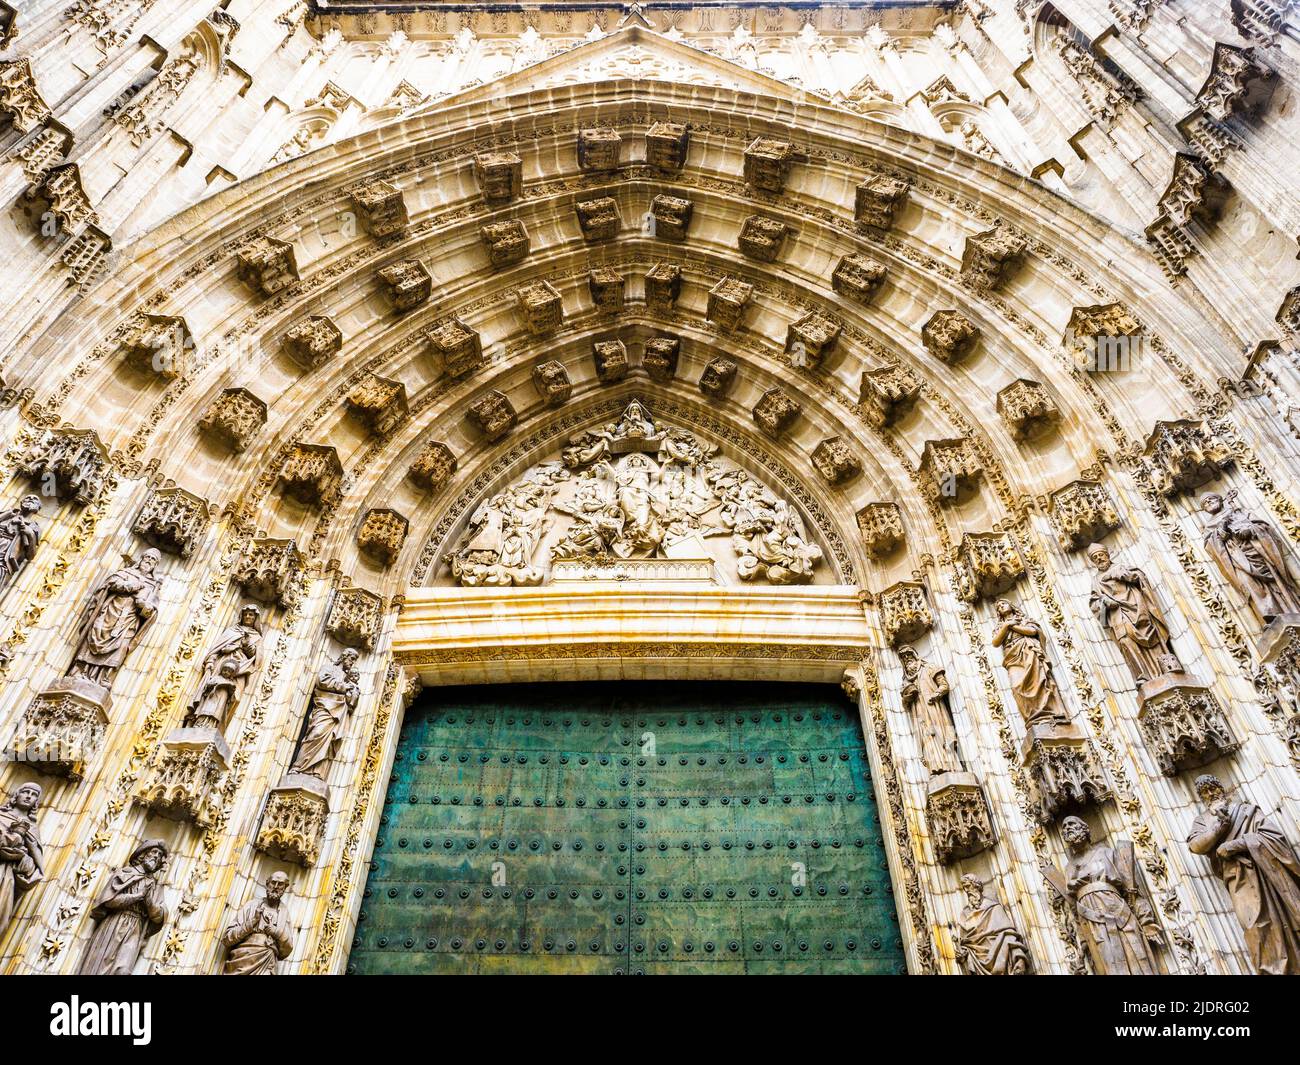 Puerta de la Asuncion (Himmelfahrt) - Kathedrale von Sevilla, Spanien Stockfoto